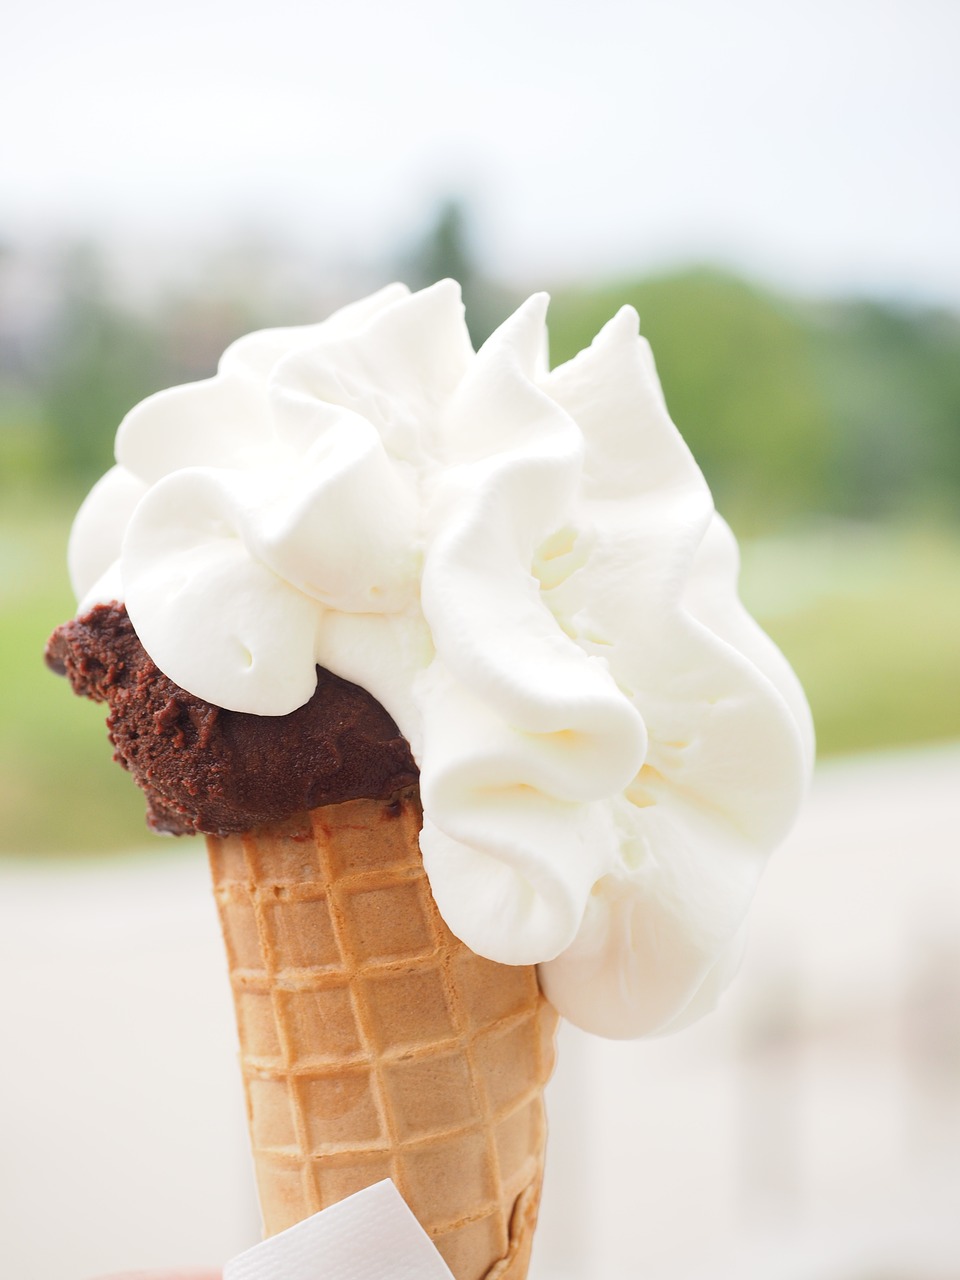 Homemade Ice Cream - Custard Based